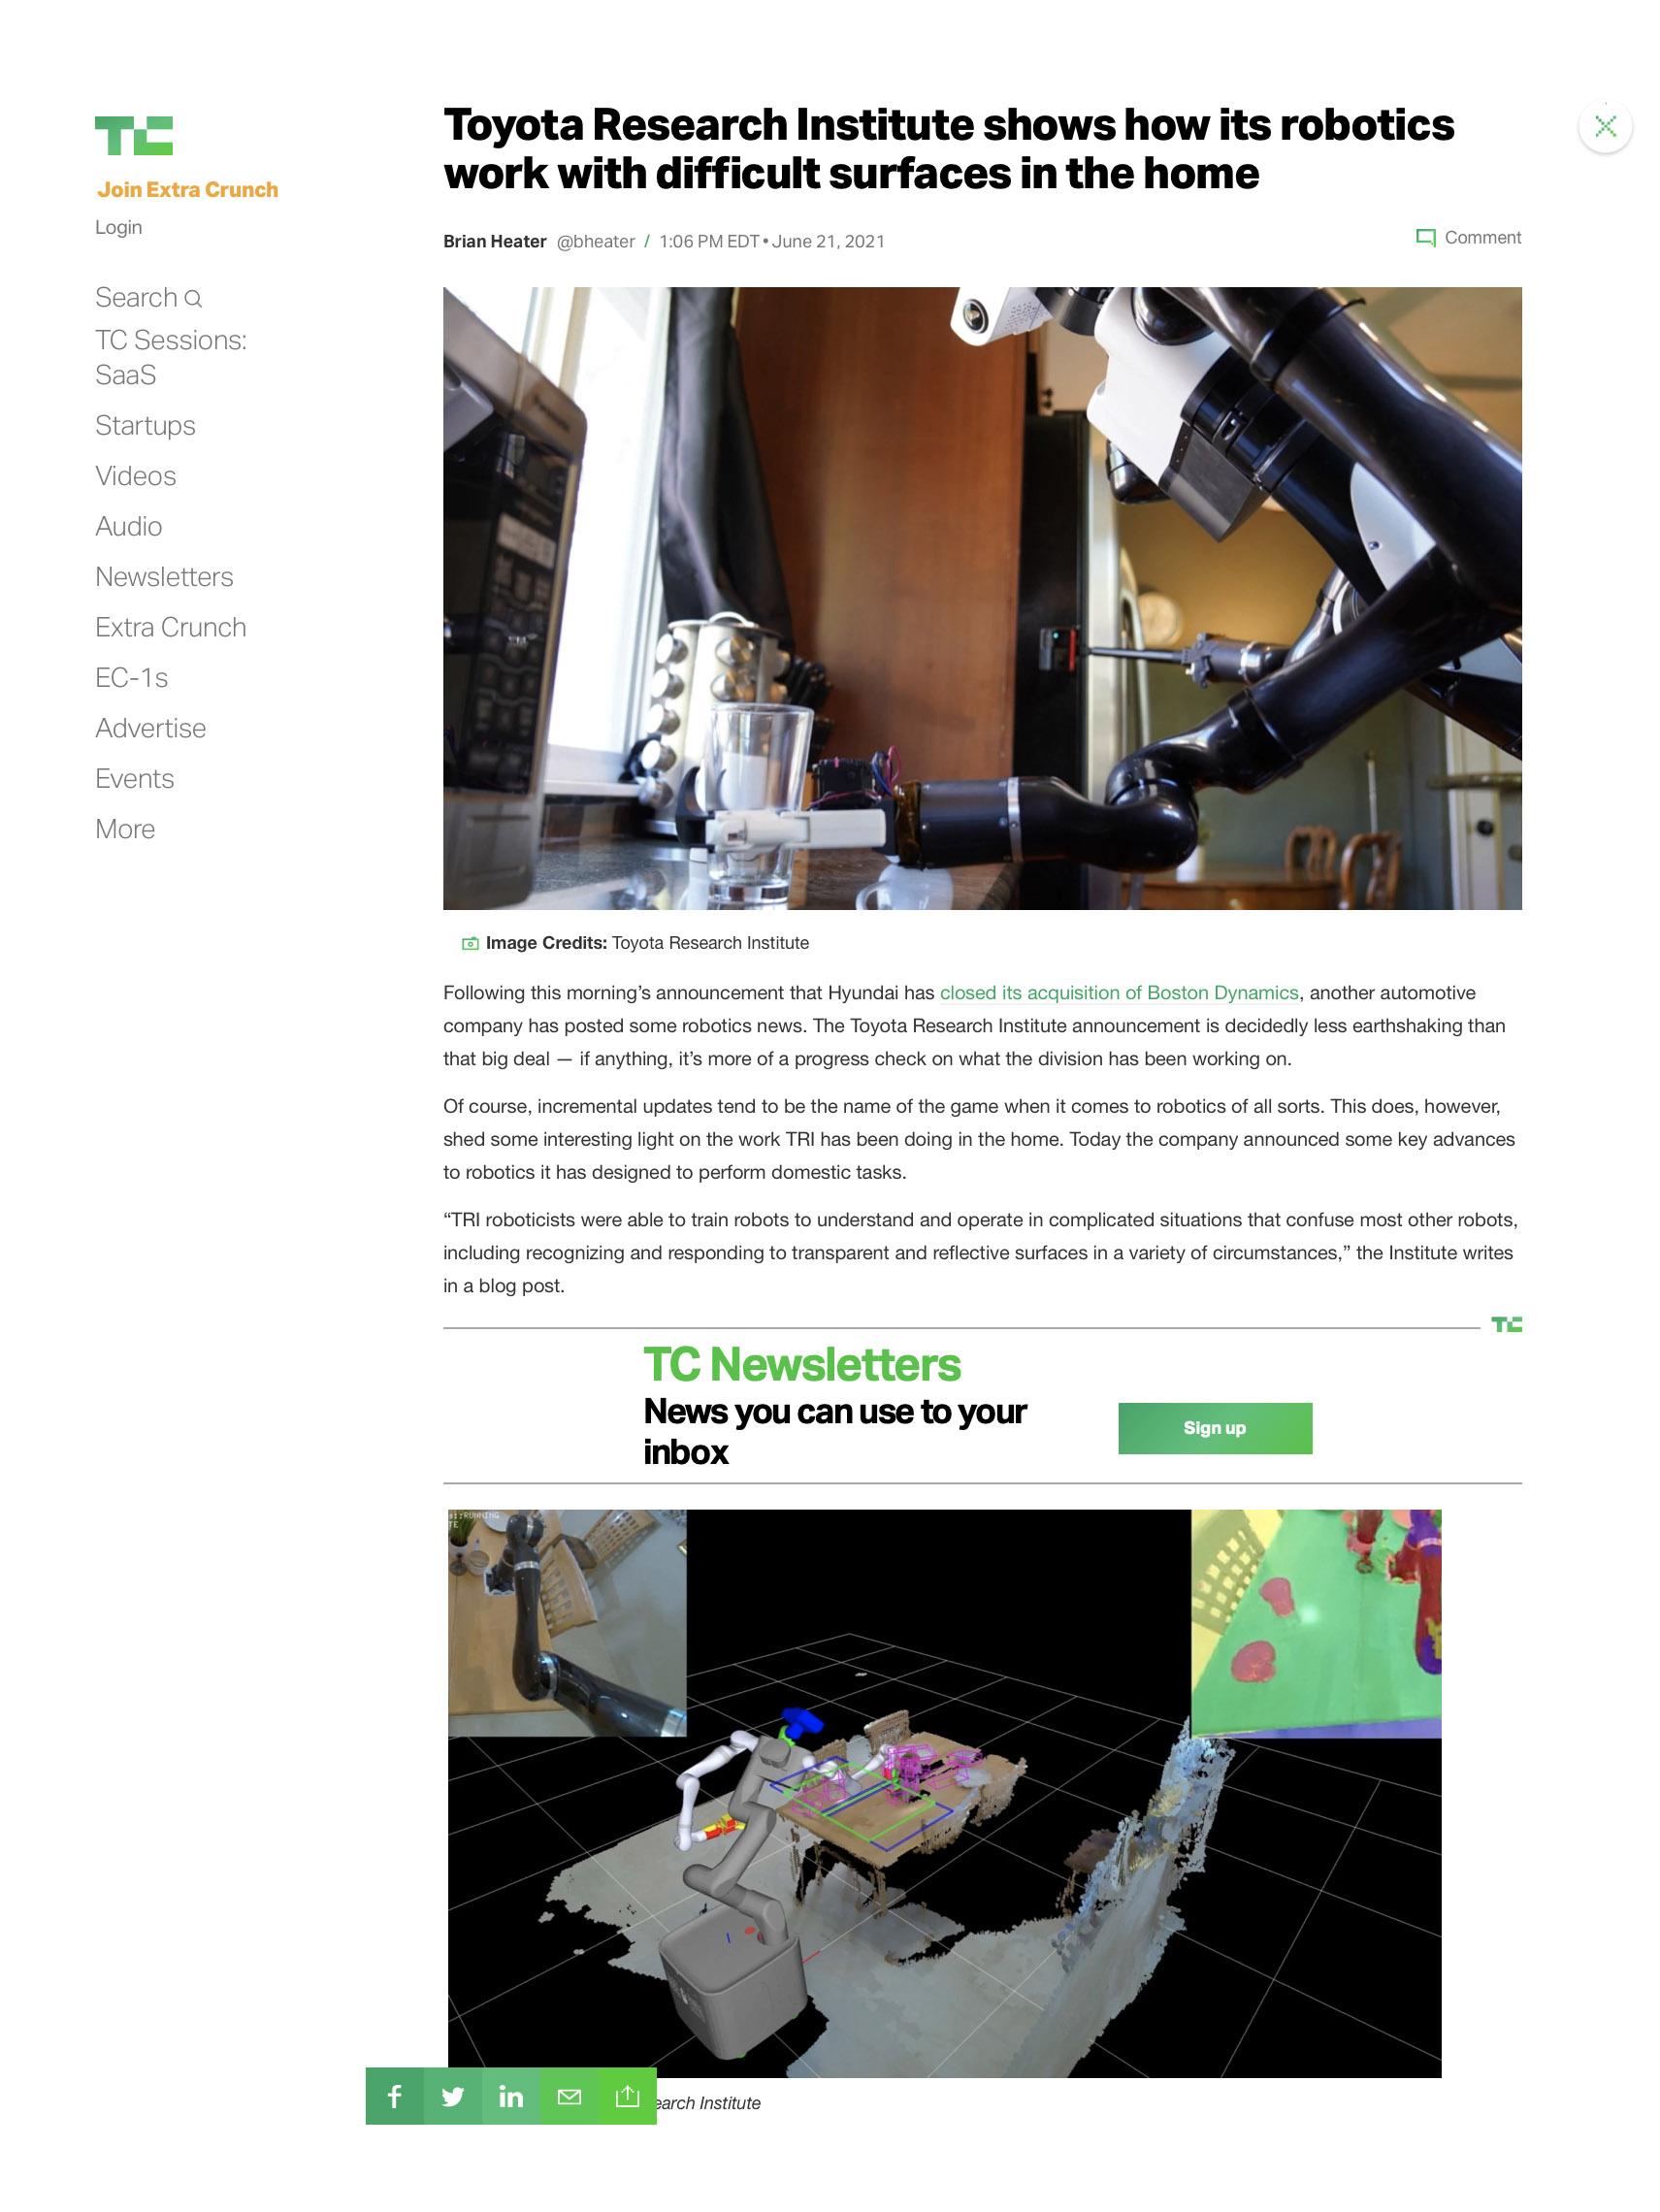 TRI's latest advances in robotics featured on techcrunch.com